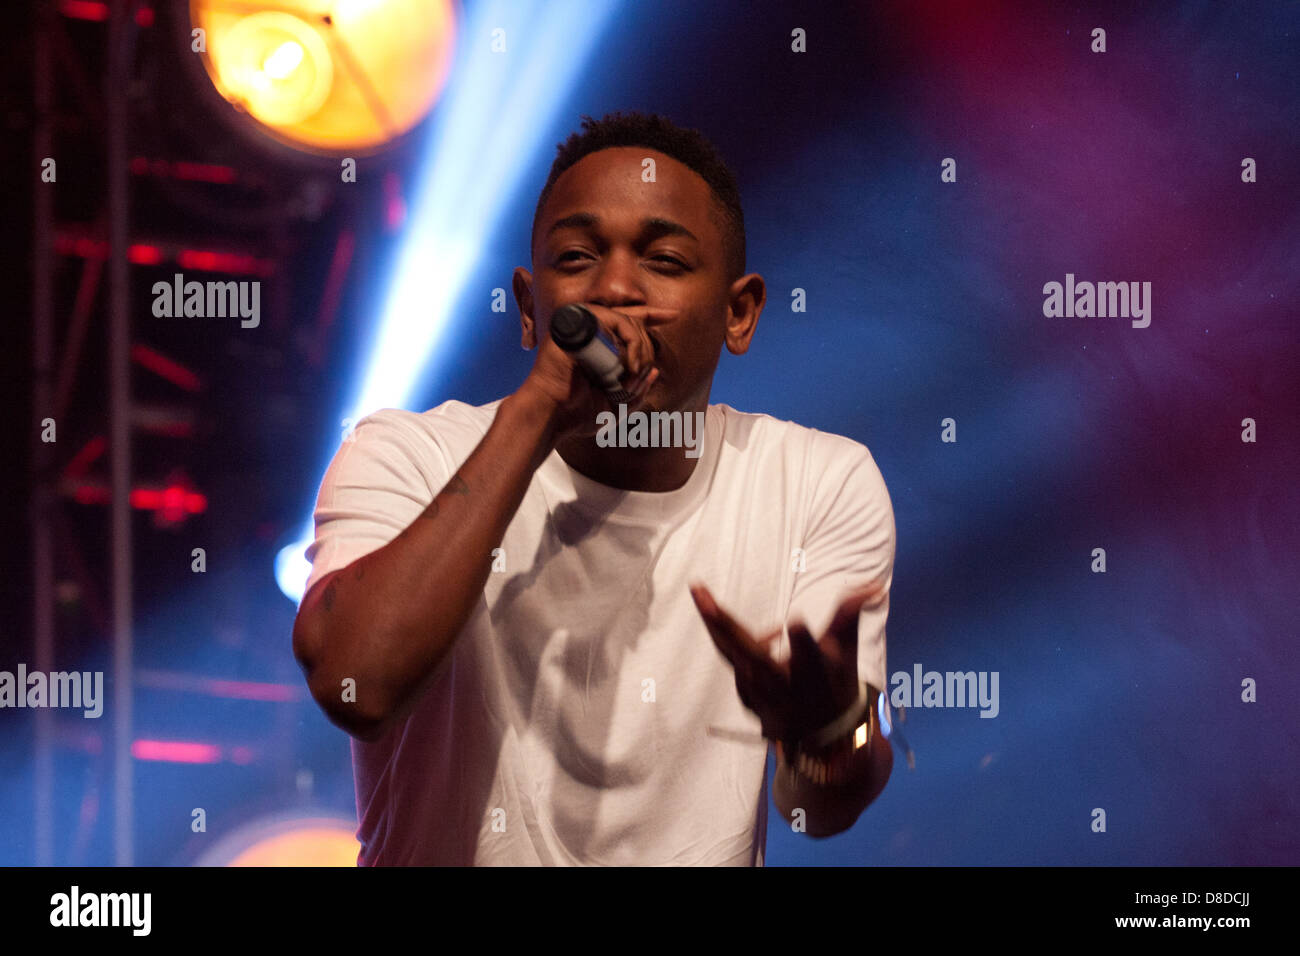 Kendrick Lamar Duckworth, simply known as Kendrick Lamar, is an ...